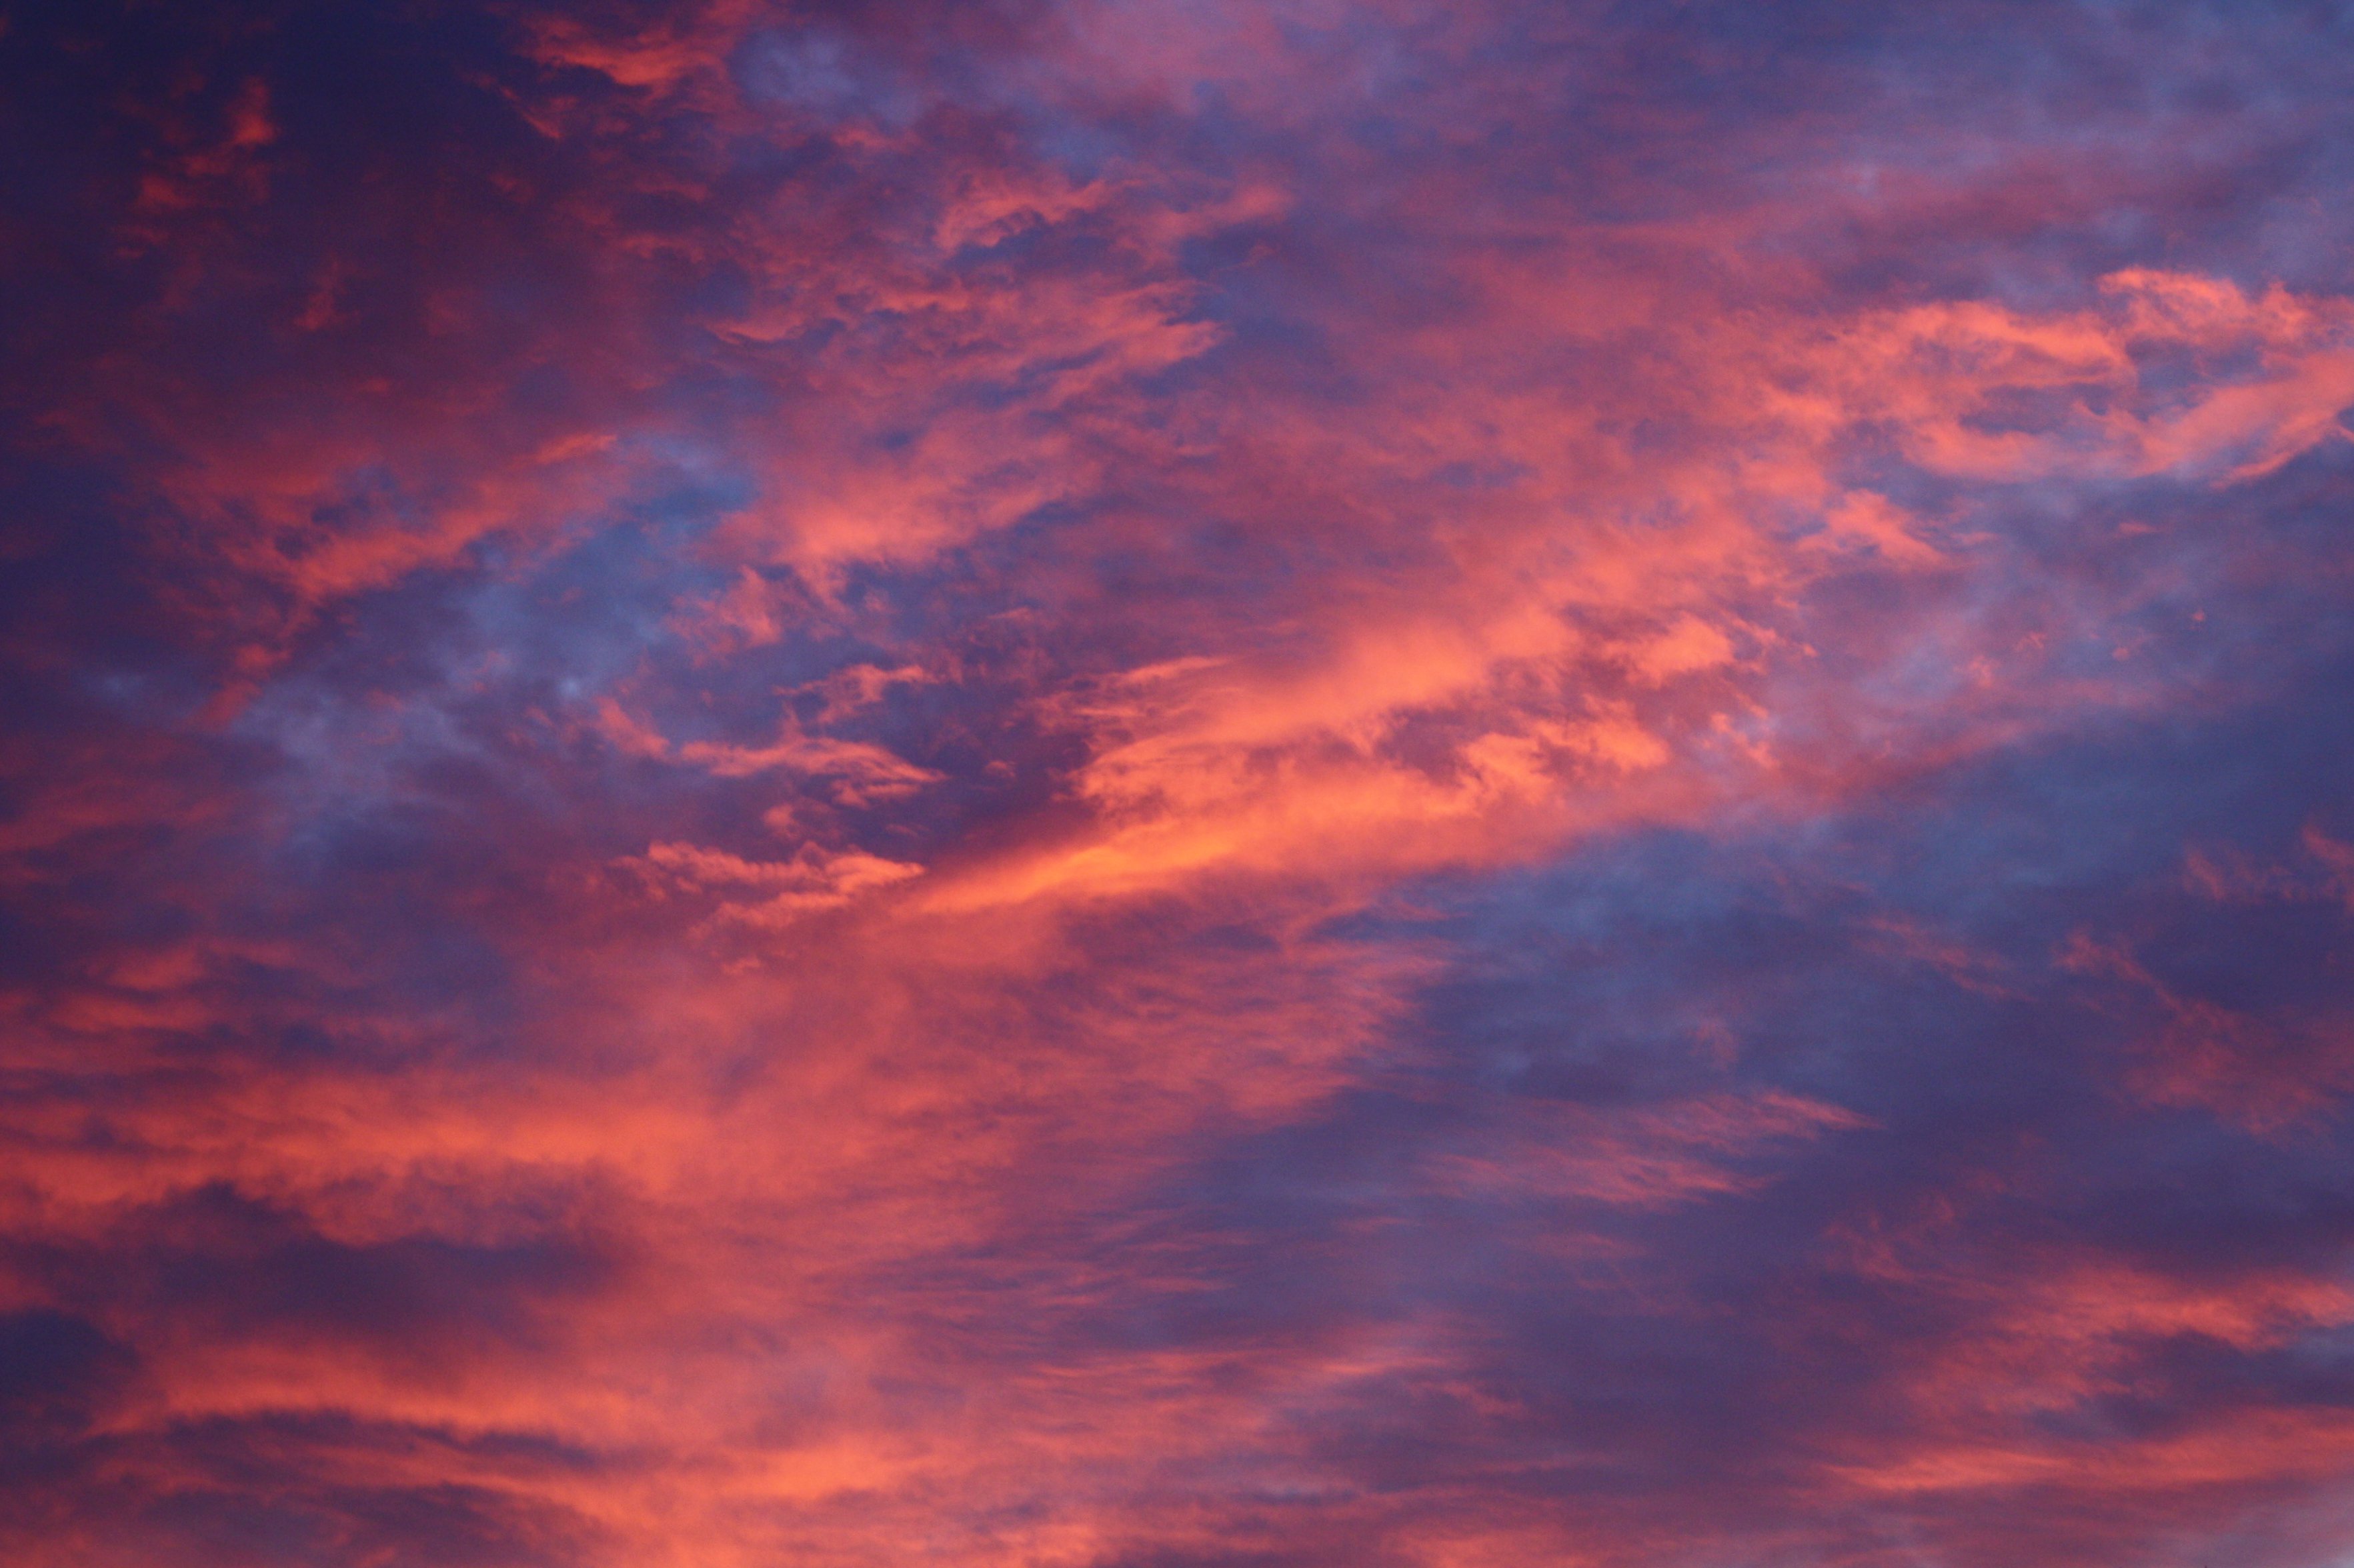 Sky at Sunrise Picture | Free Photograph | Photos Public Domain